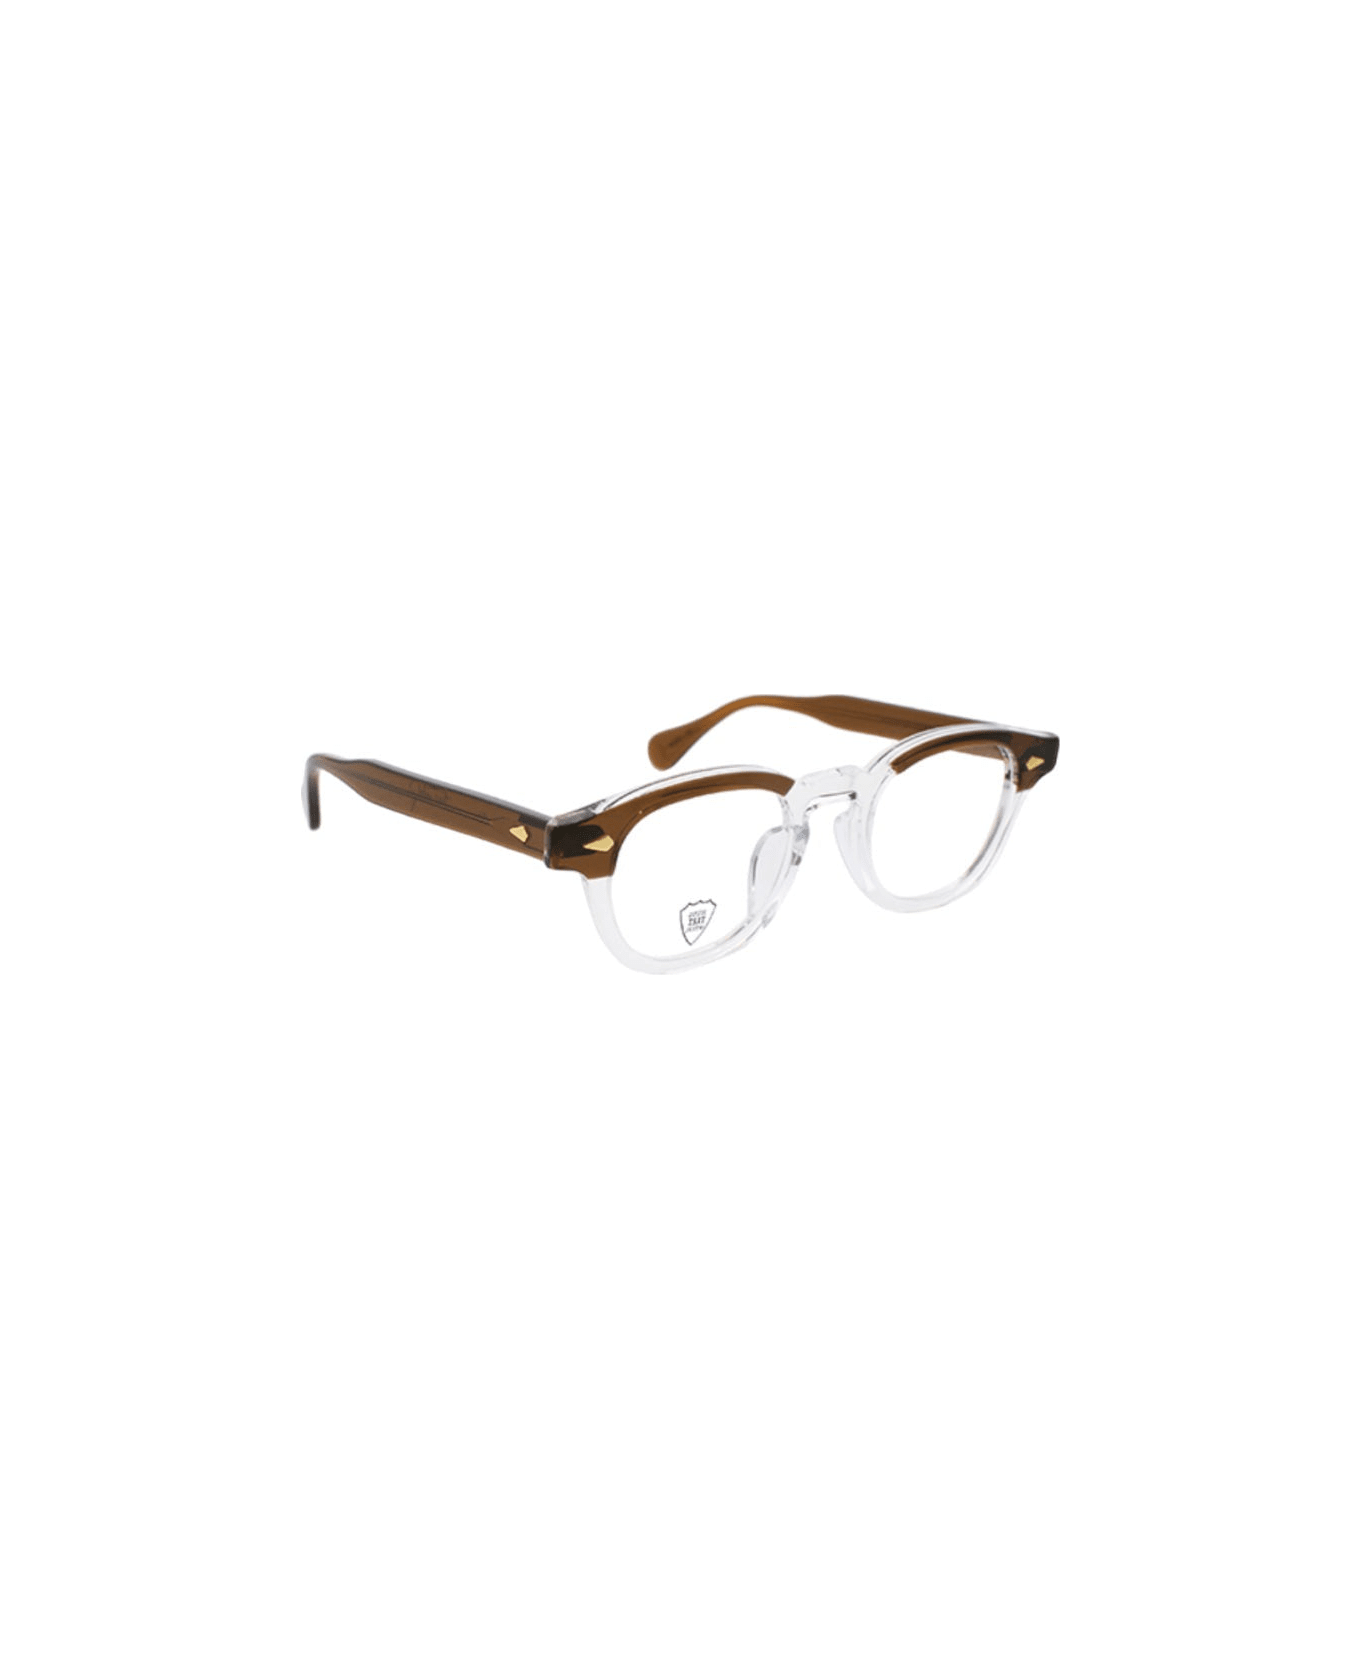 Julius Tart Optical Ar Gold - Limited Edition Glasses